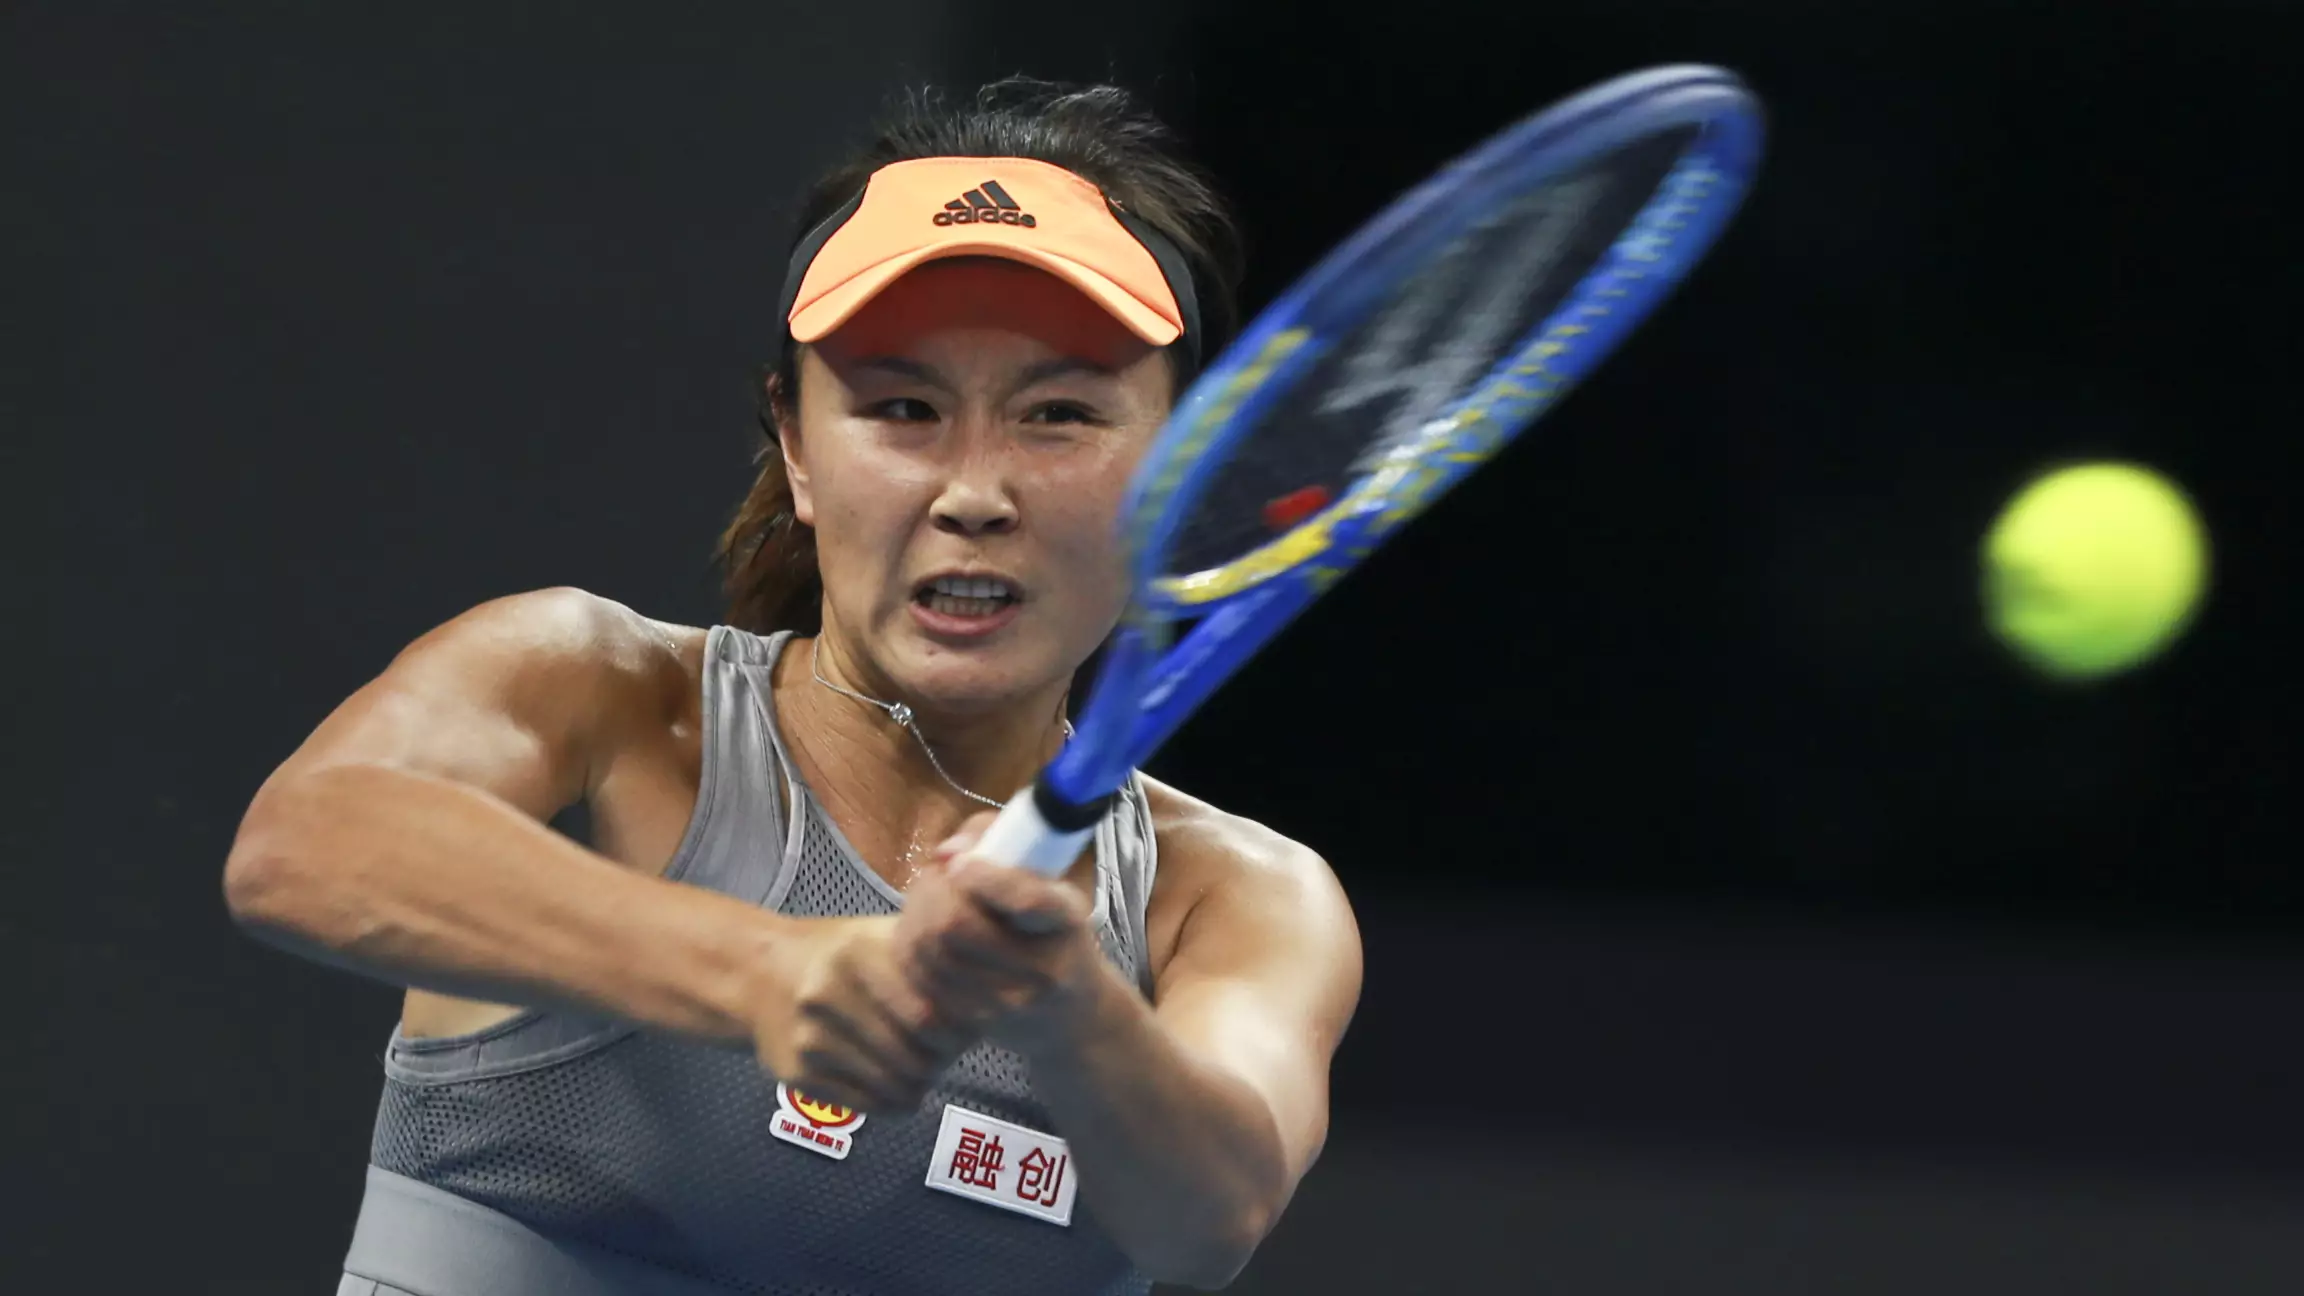 Tennis Fans Skeptical After Missing Player Peng Shuai Sends 'I'm Not Missing' Email